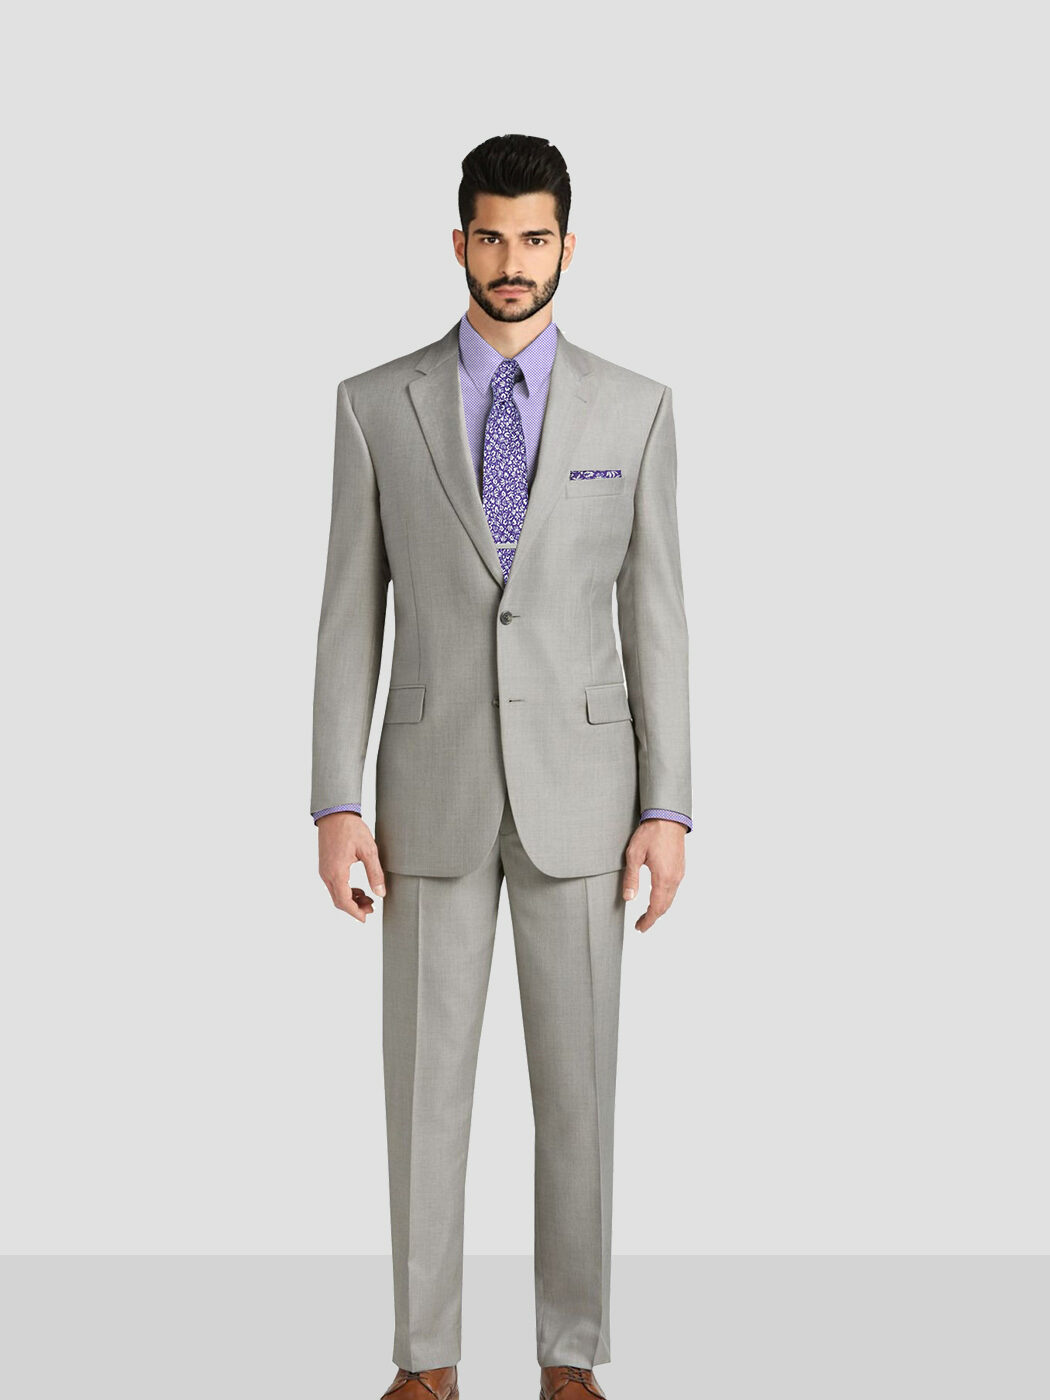 Men's Grey Suits & Separates | Nordstrom